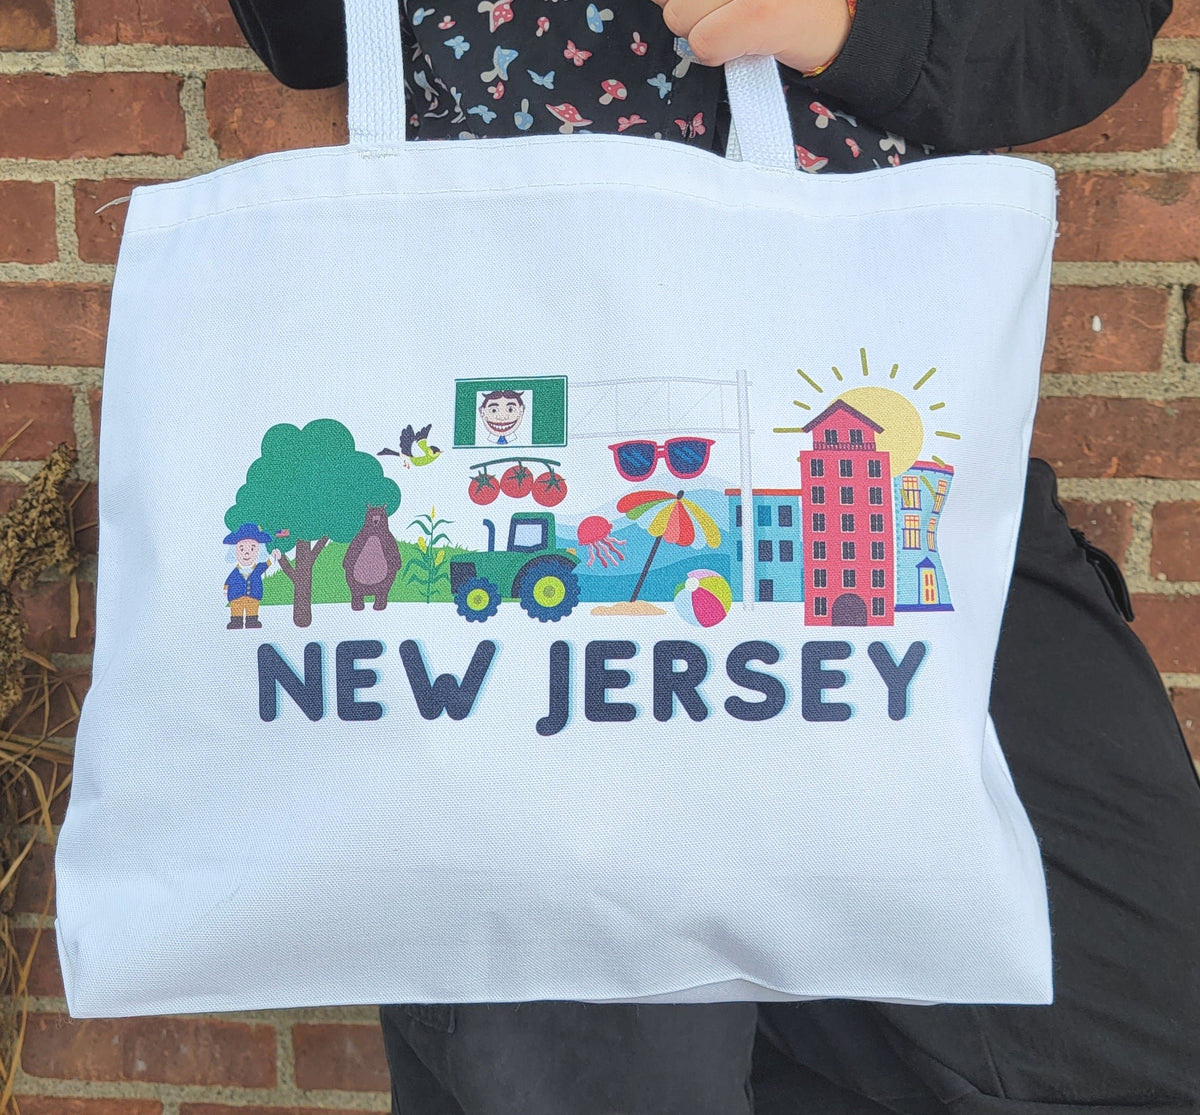 Jersey City New Jersey Skyline Tote Bag